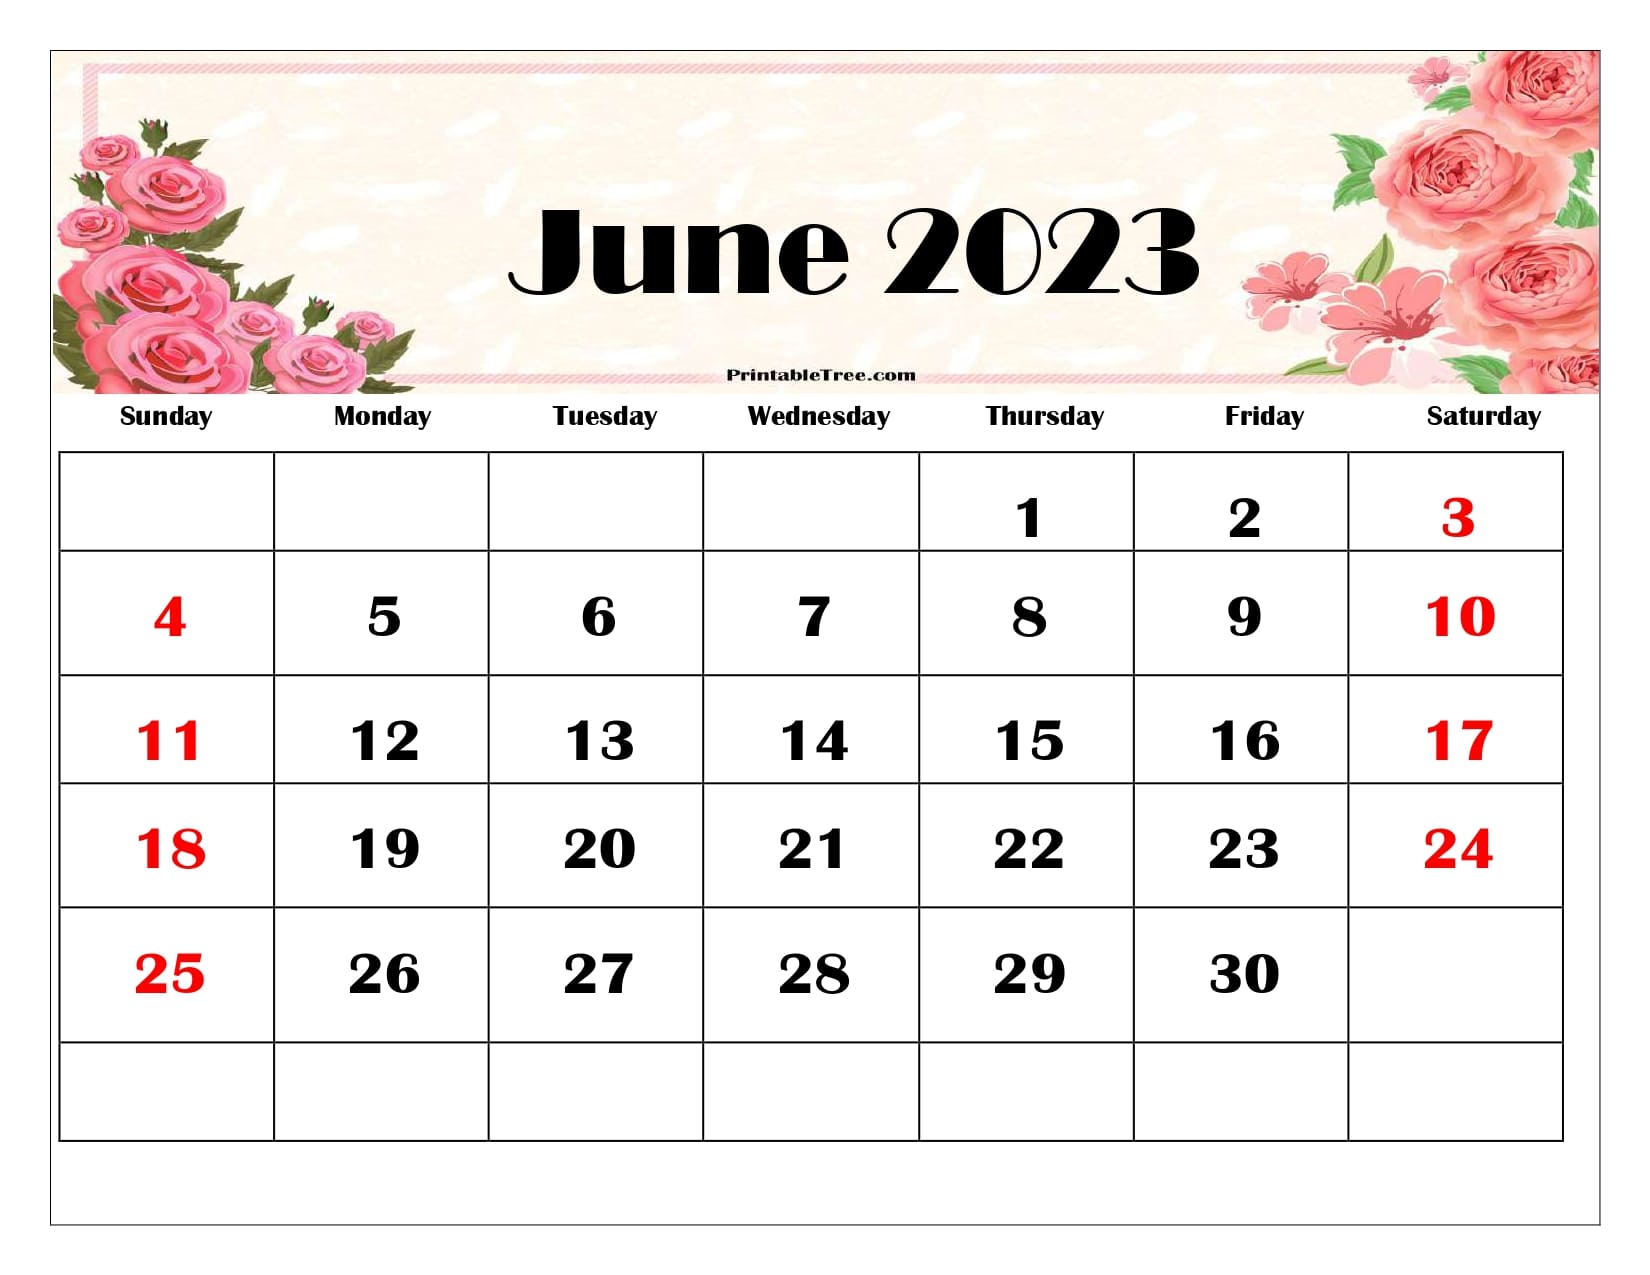 June 2023 Floral Calendar Printable